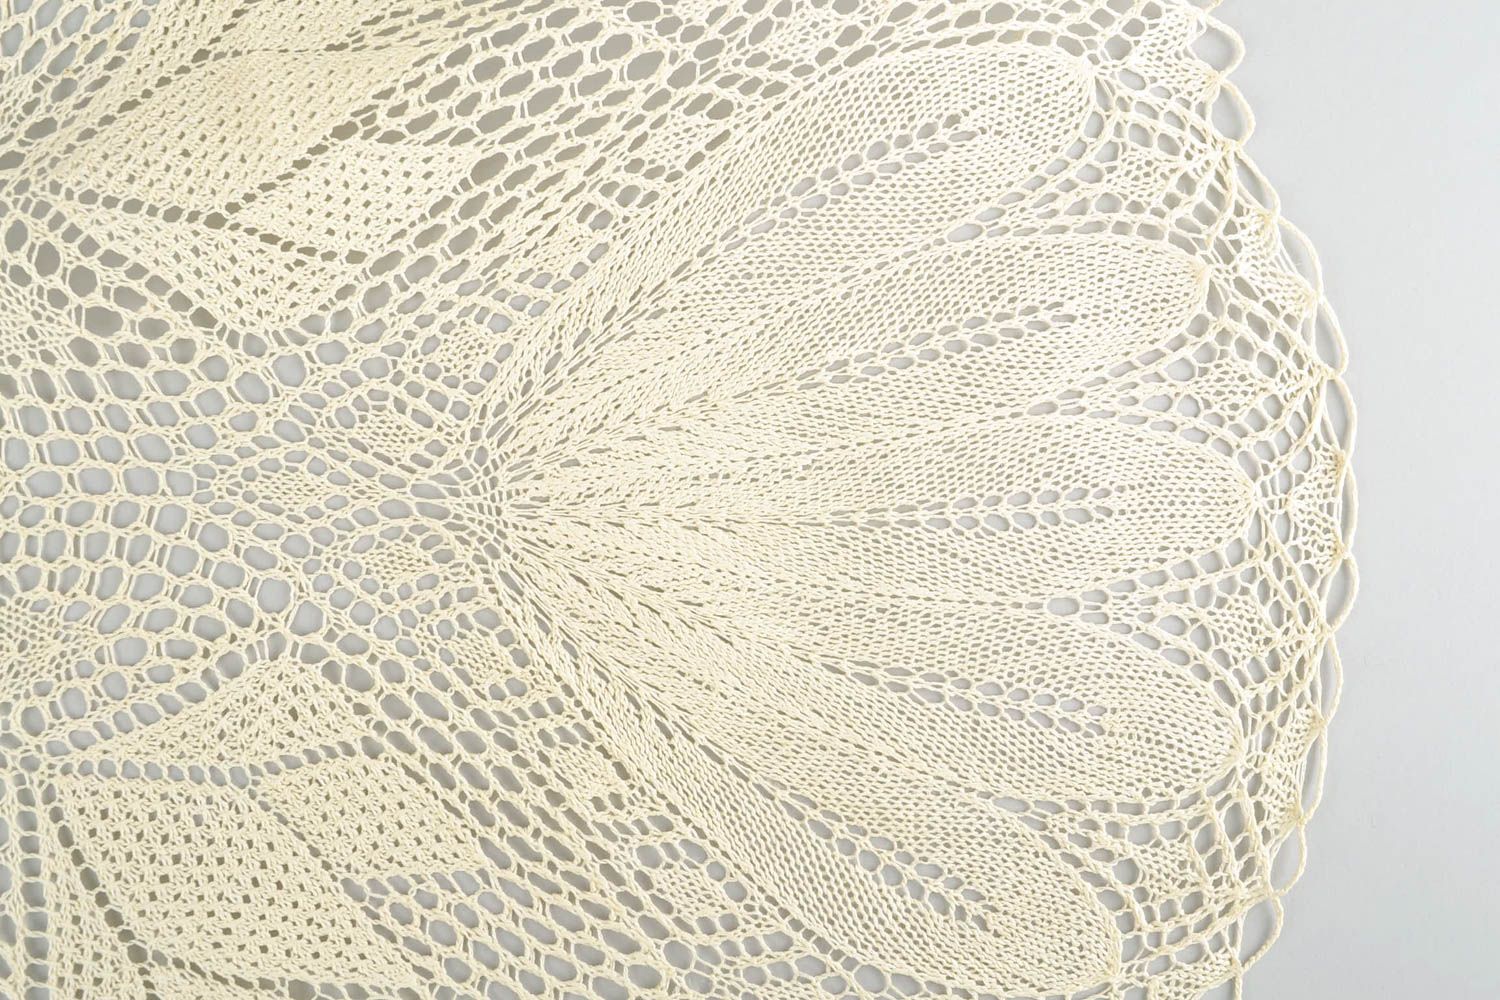 Openwork crochet tablecloth handmade lace napkin vintage style home ideas photo 5